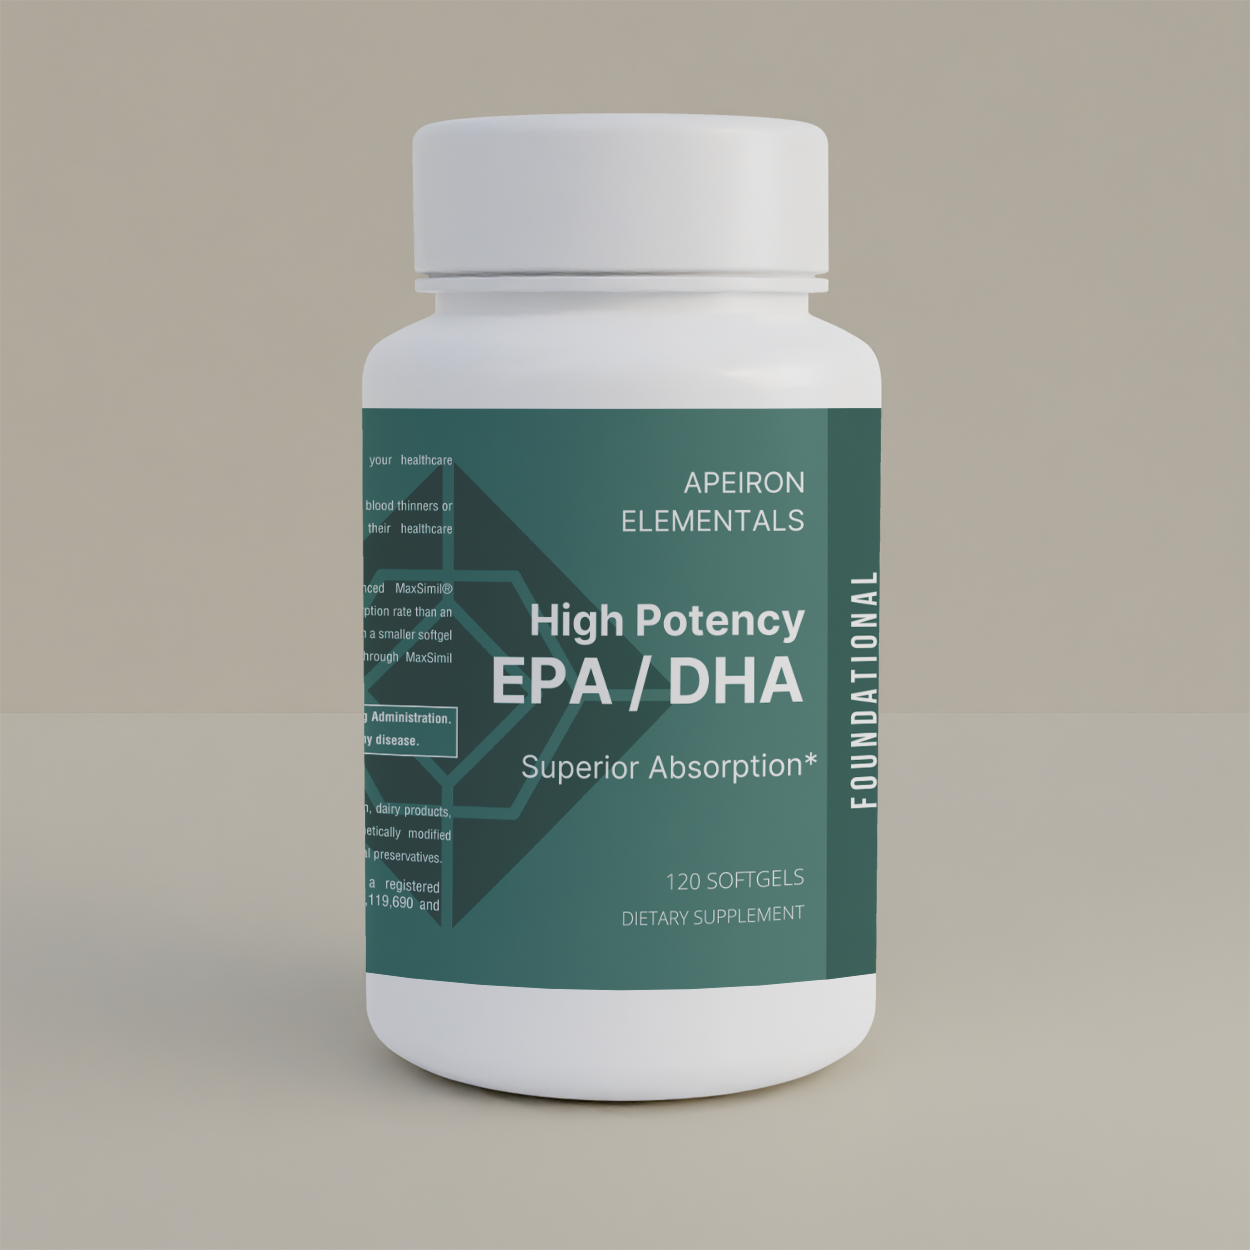 Staff: High Potency EPA/DHA